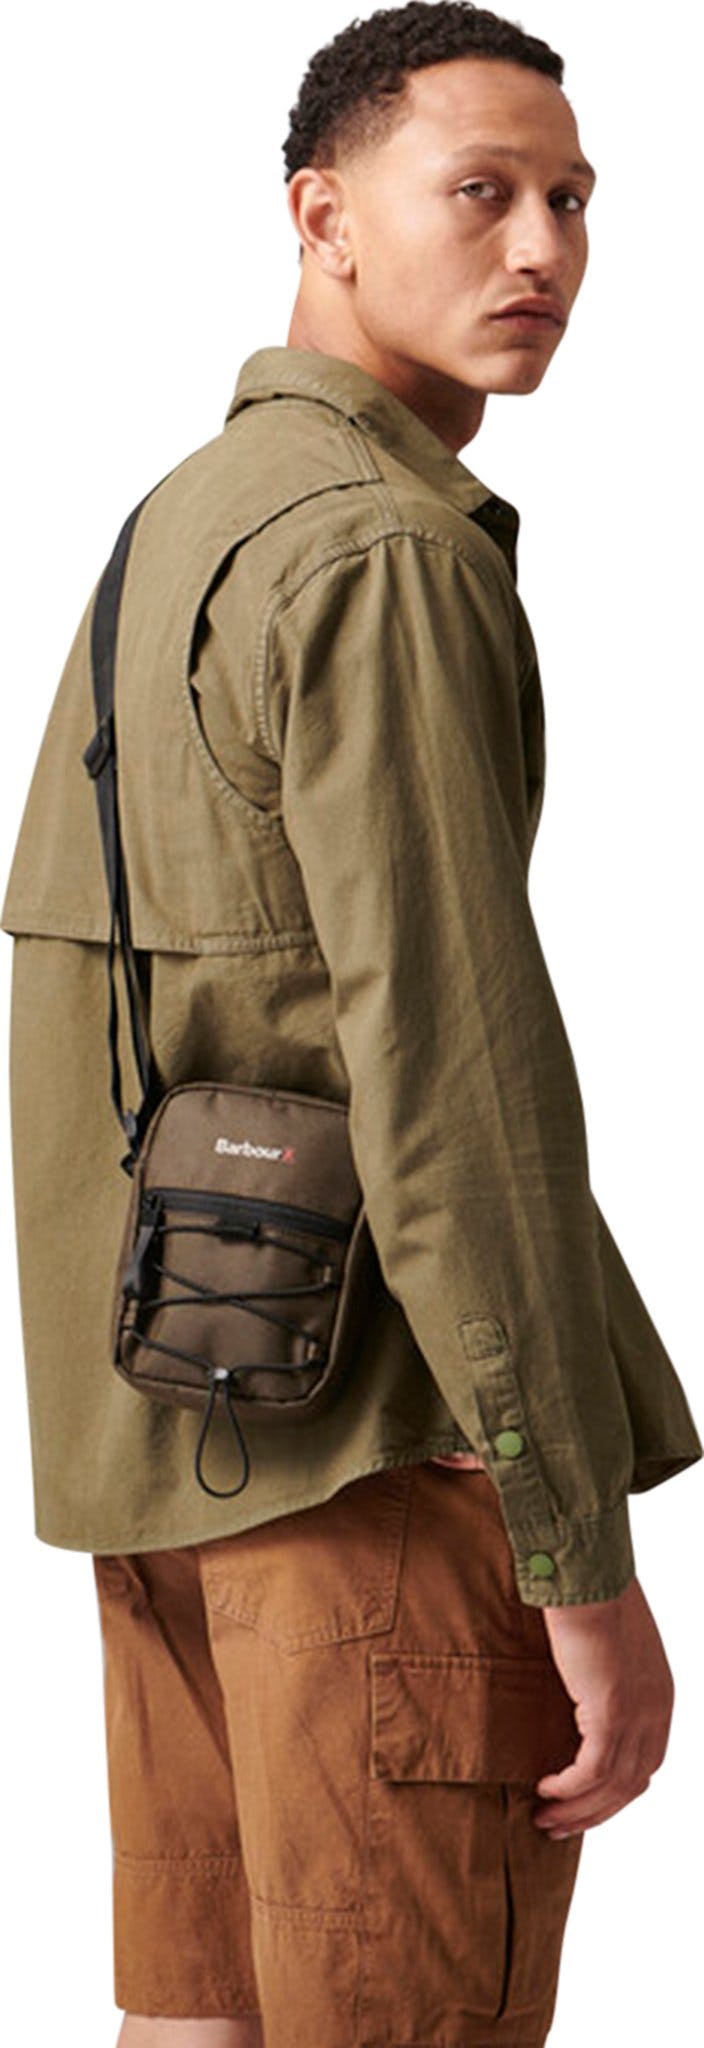 Product gallery image number 2 for product Kenby Showerproof Jacket - Men's